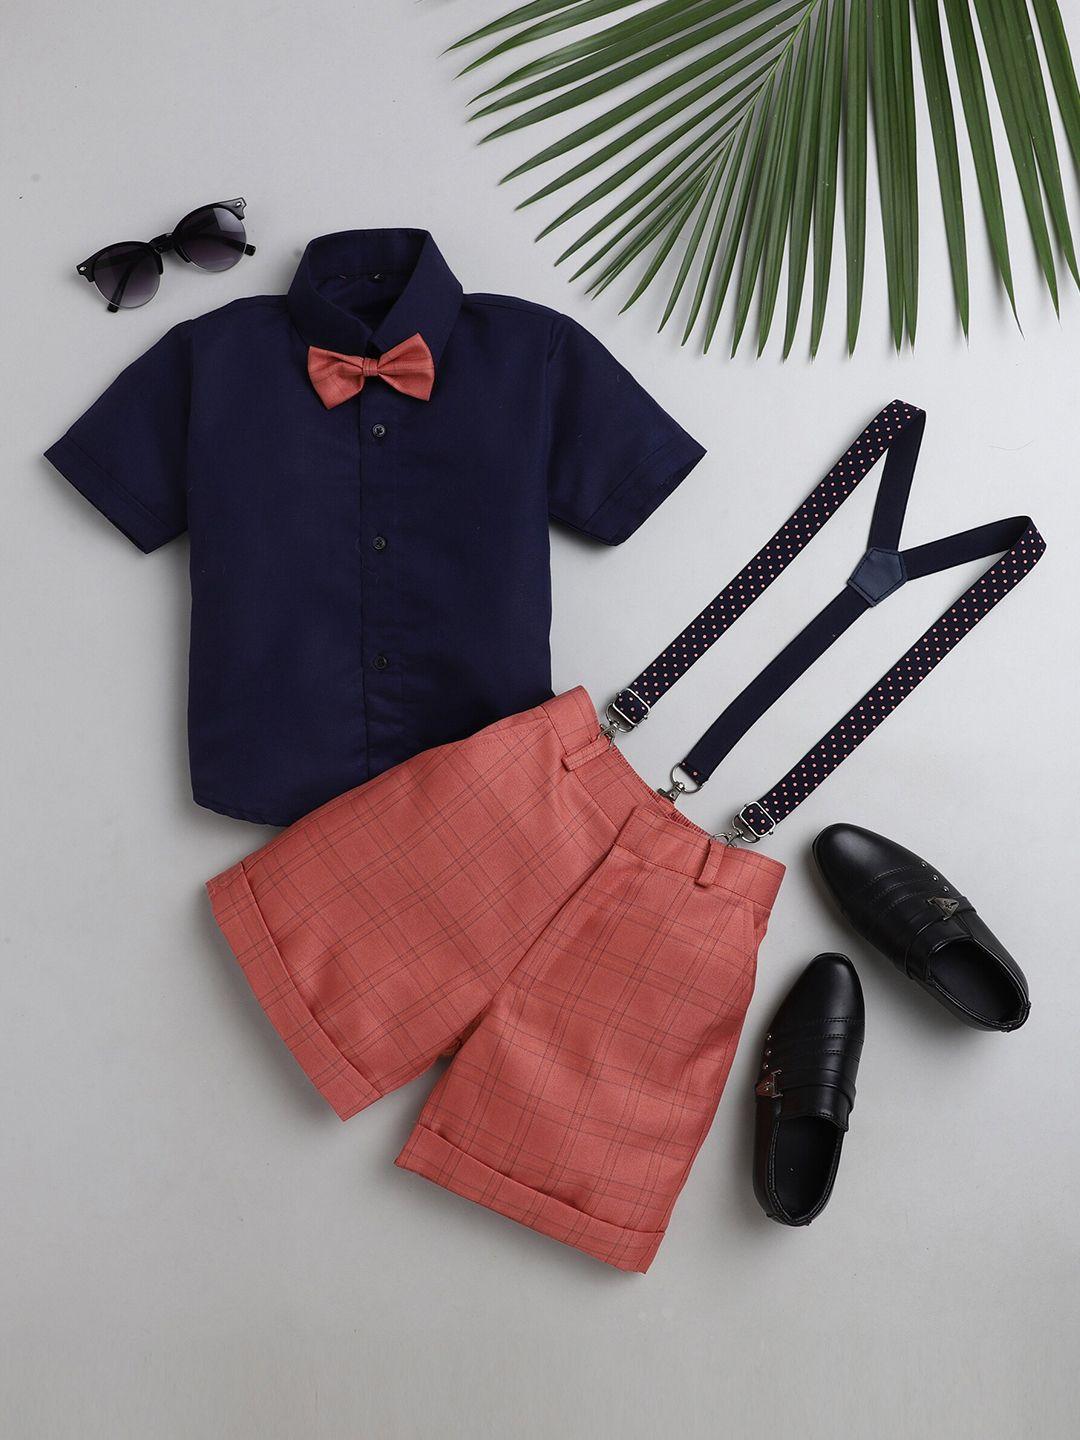 jeetethnics boys peach-coloured & navy blue shirt & shorts with suspenders